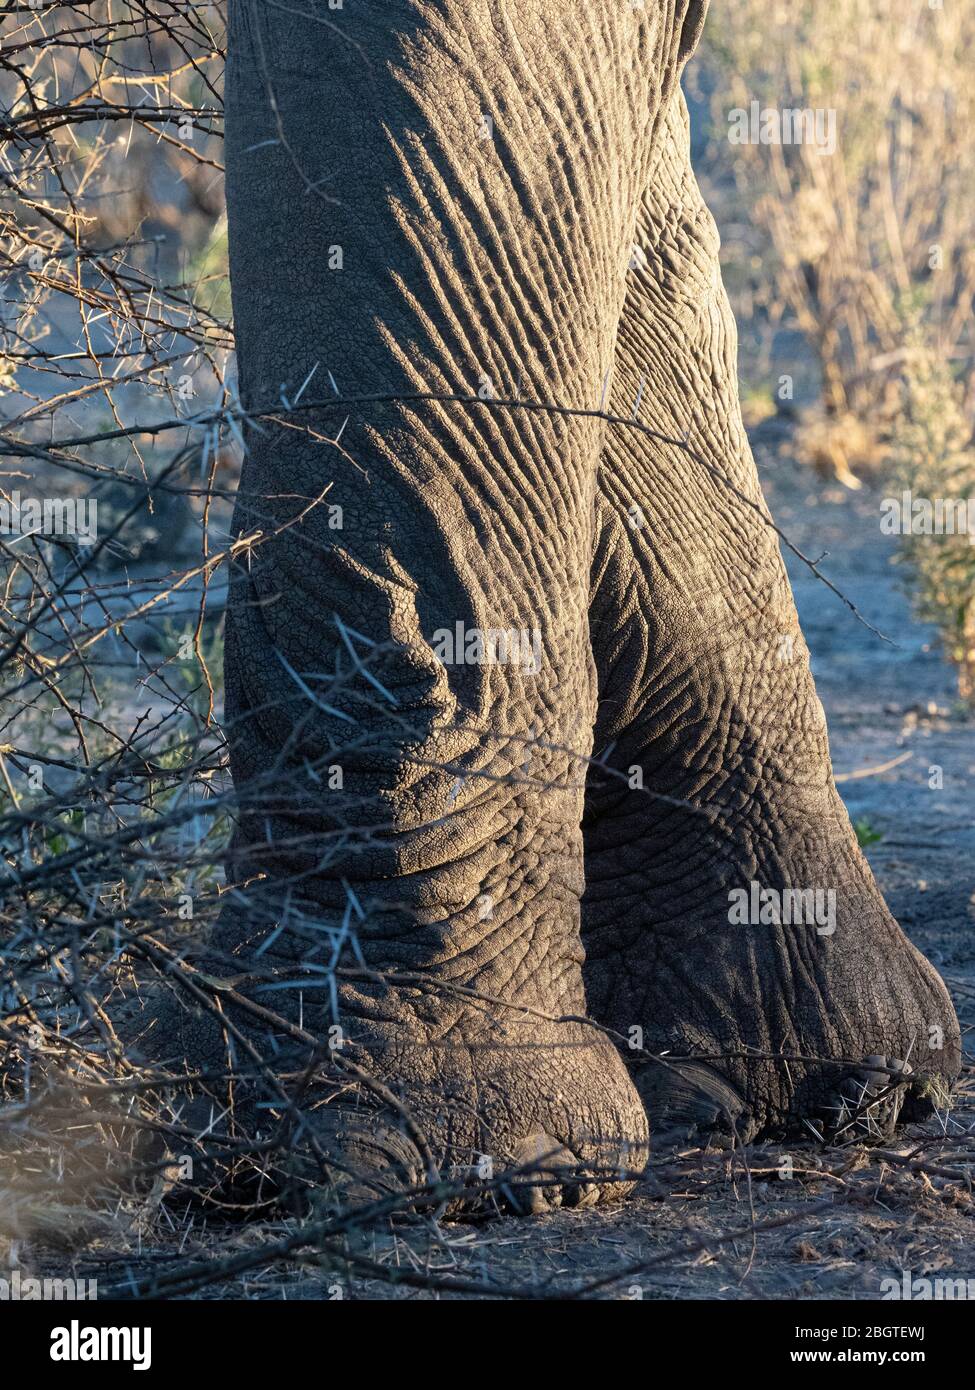 Elefante africano, Loxodonta africana, dettaglio gambe nel Parco Nazionale di Chobe, Botswana, Sudafrica. Foto Stock